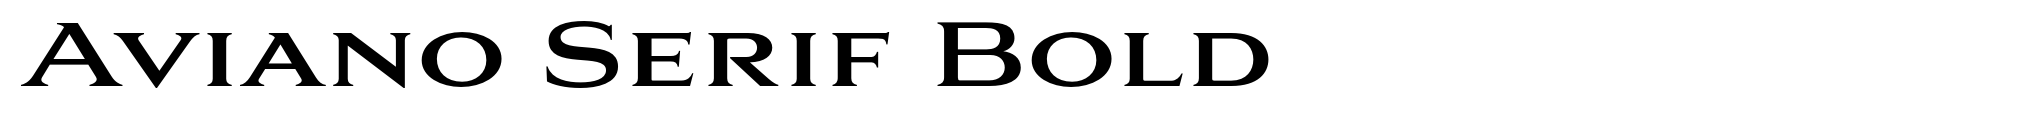 Aviano Serif Bold image